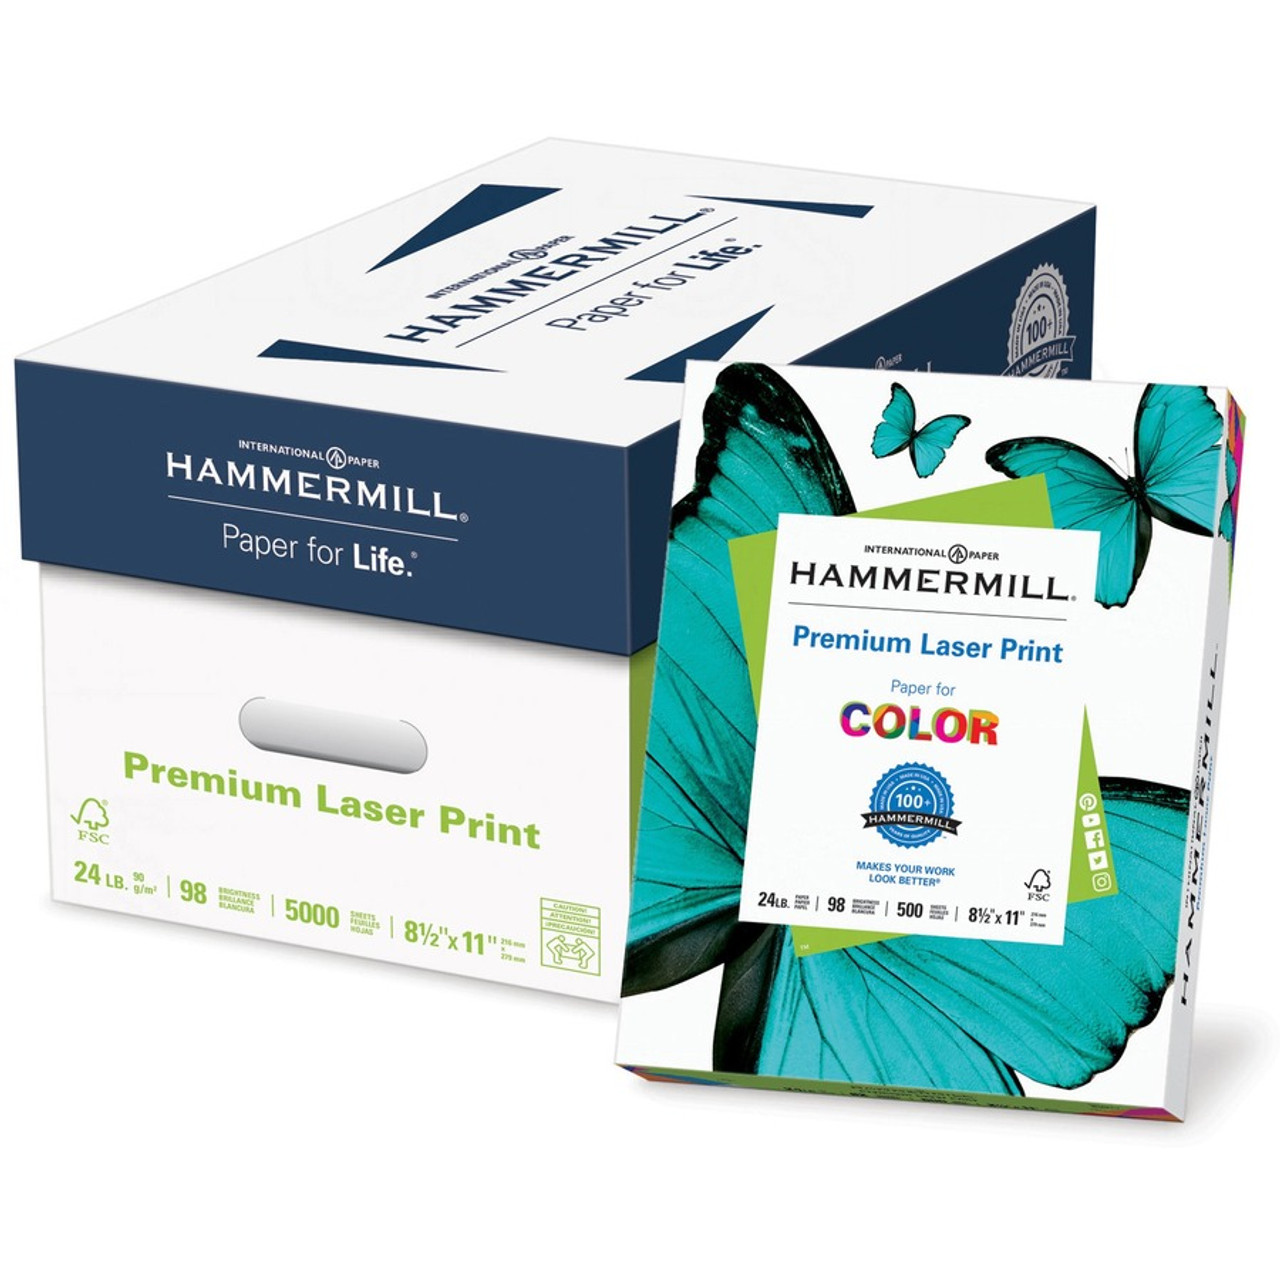 Hammermill Premium Color Copy Cover, 100 Bright, 60lb, 8.5 x 11, 250/Pack, HAM122549